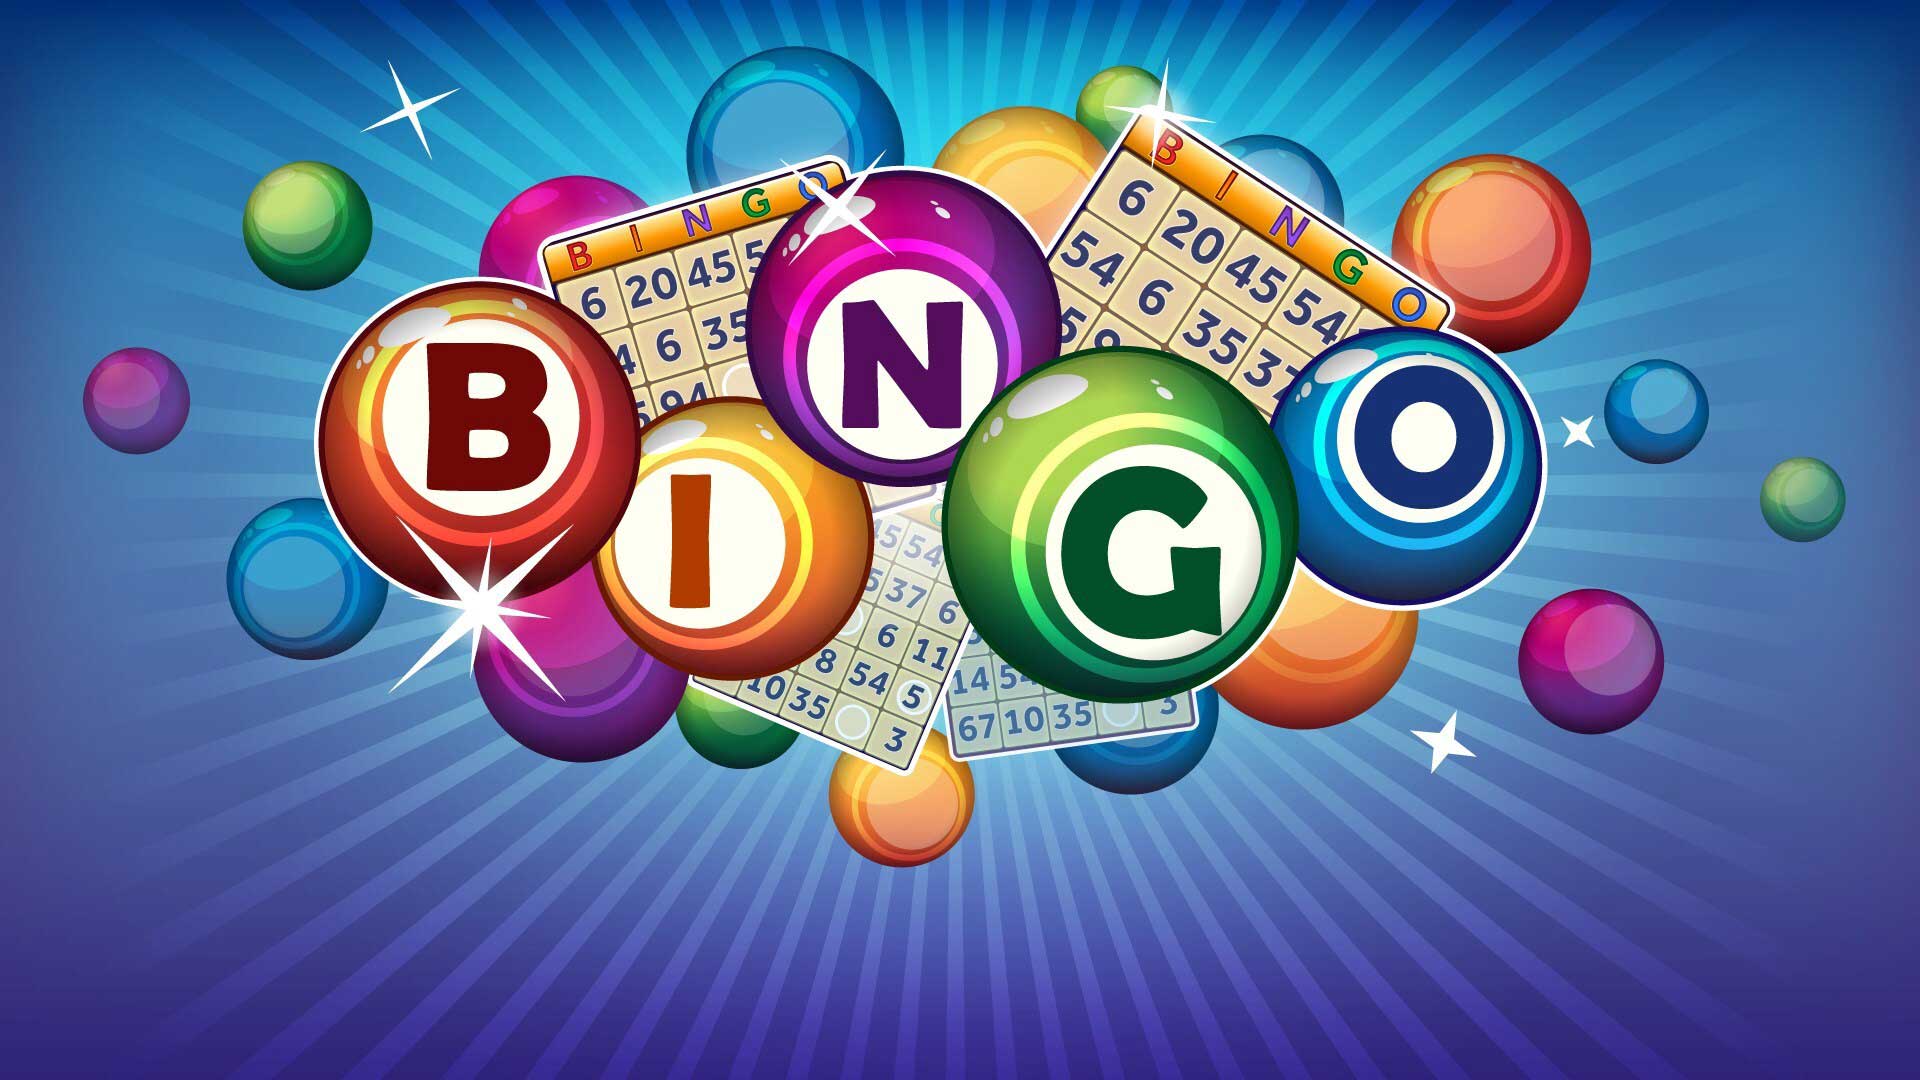 Bingo Club Merryland